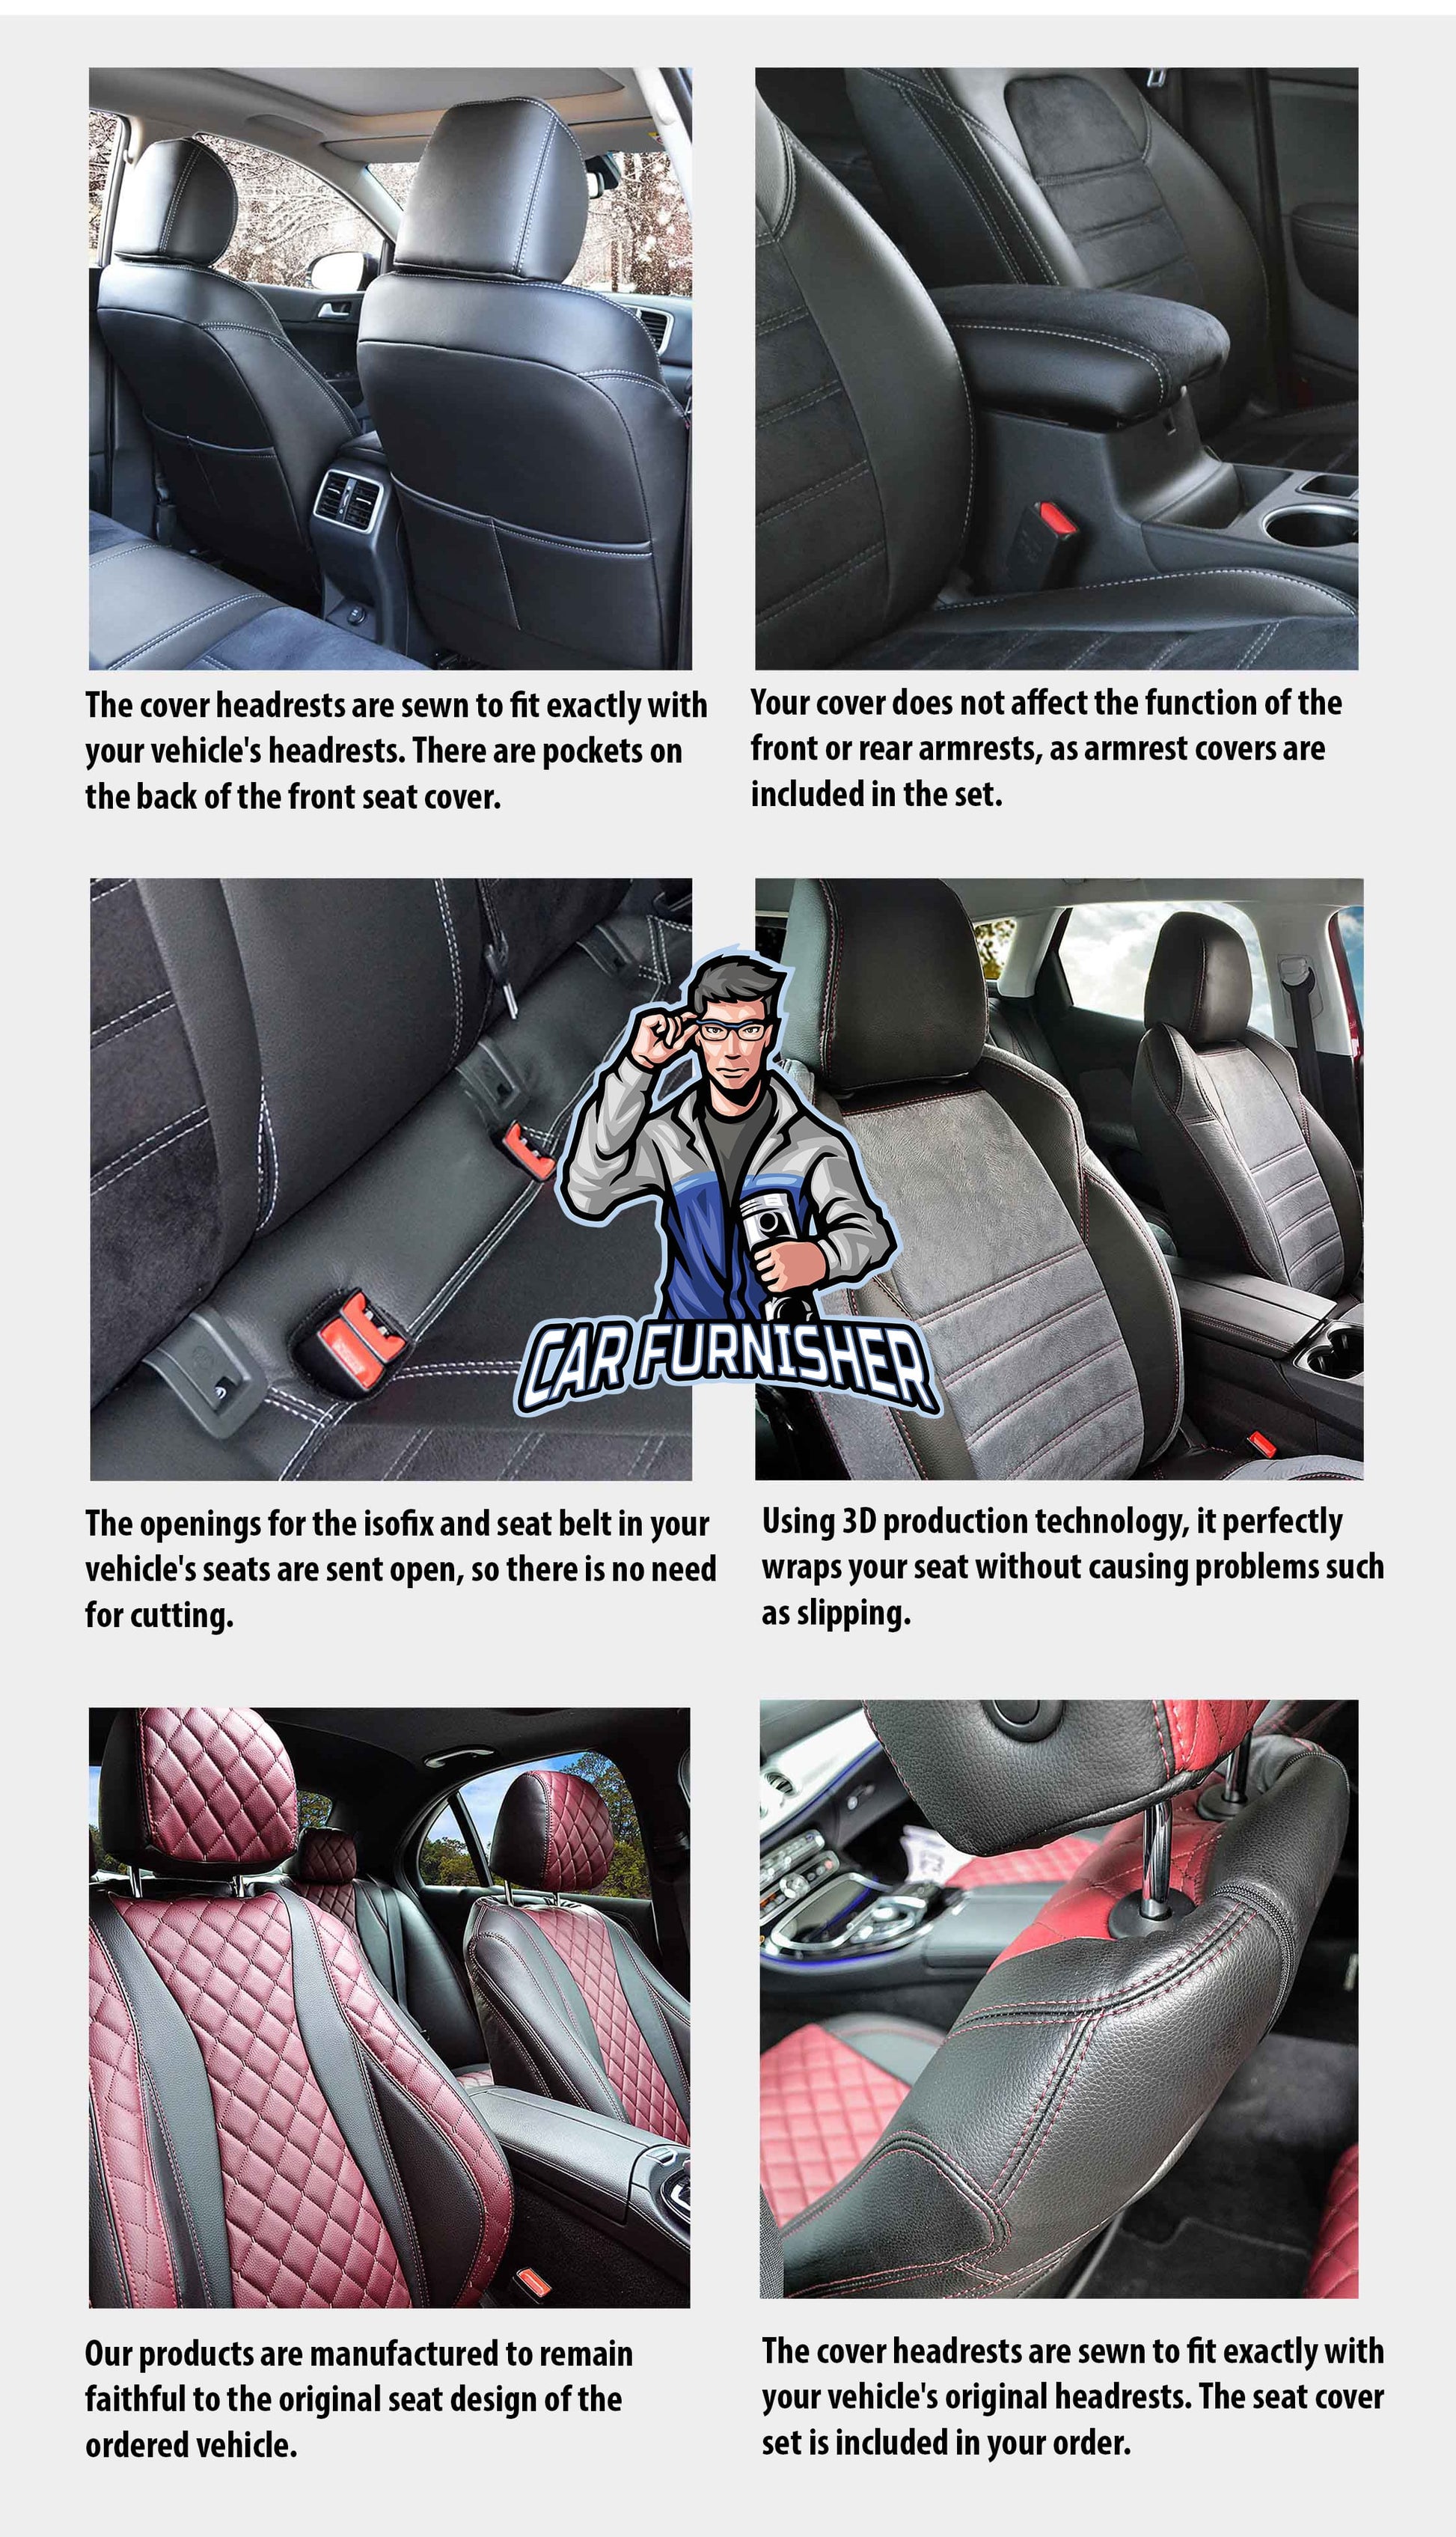 Skoda Karoq Seat Covers Tokyo Foal Feather Design Dark Gray Leather & Foal Feather